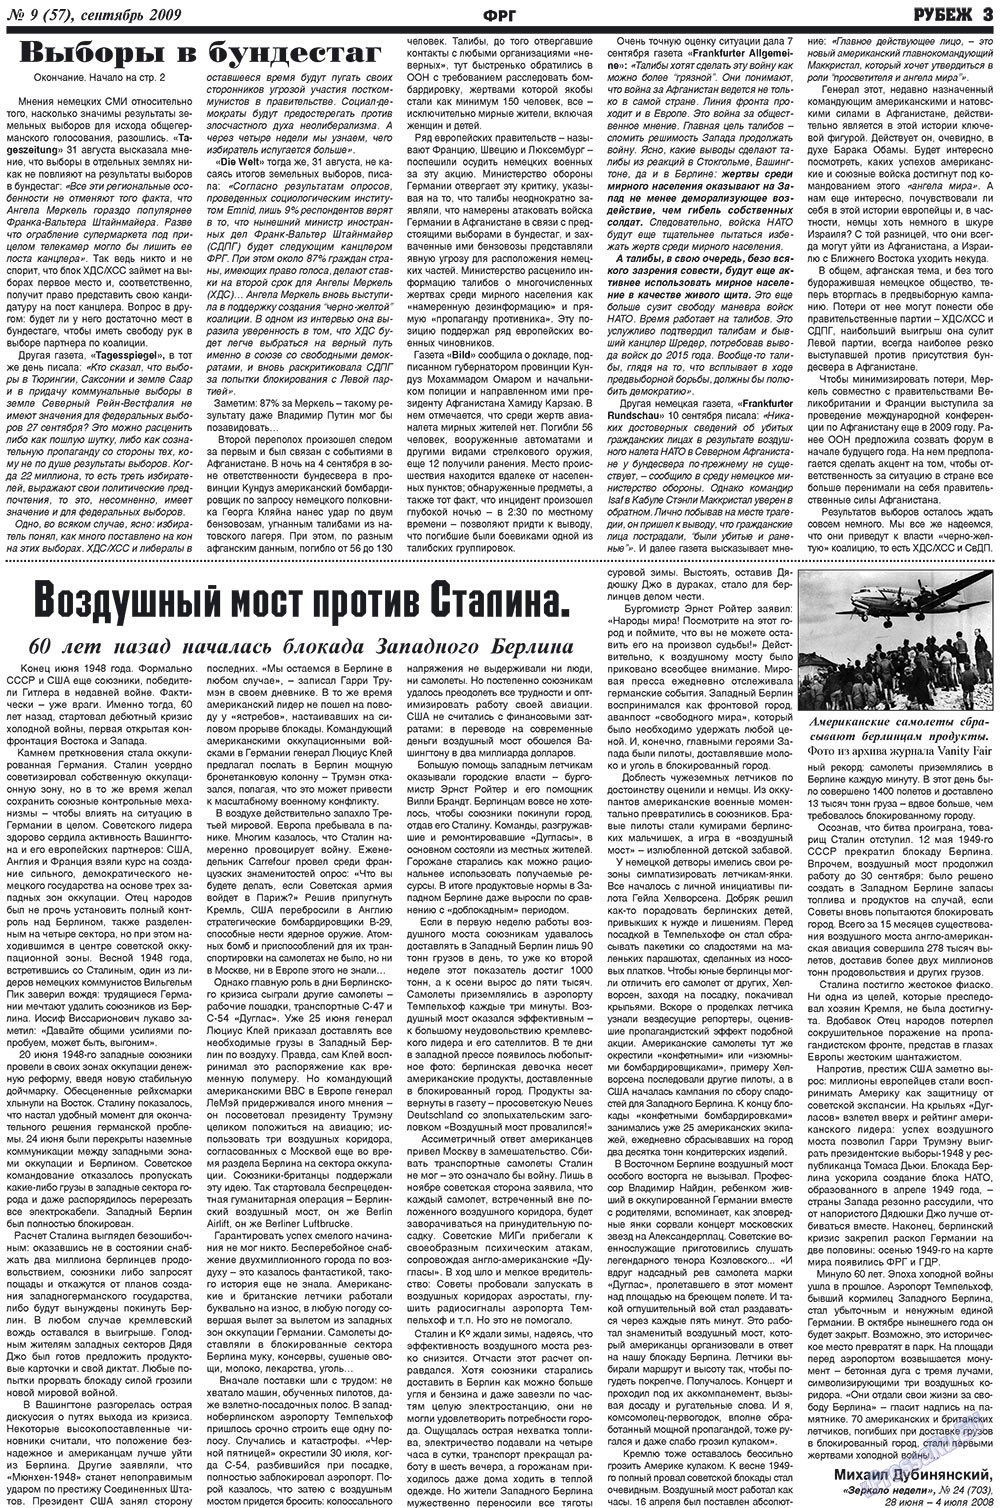 Рубеж, газета. 2009 №9 стр.3